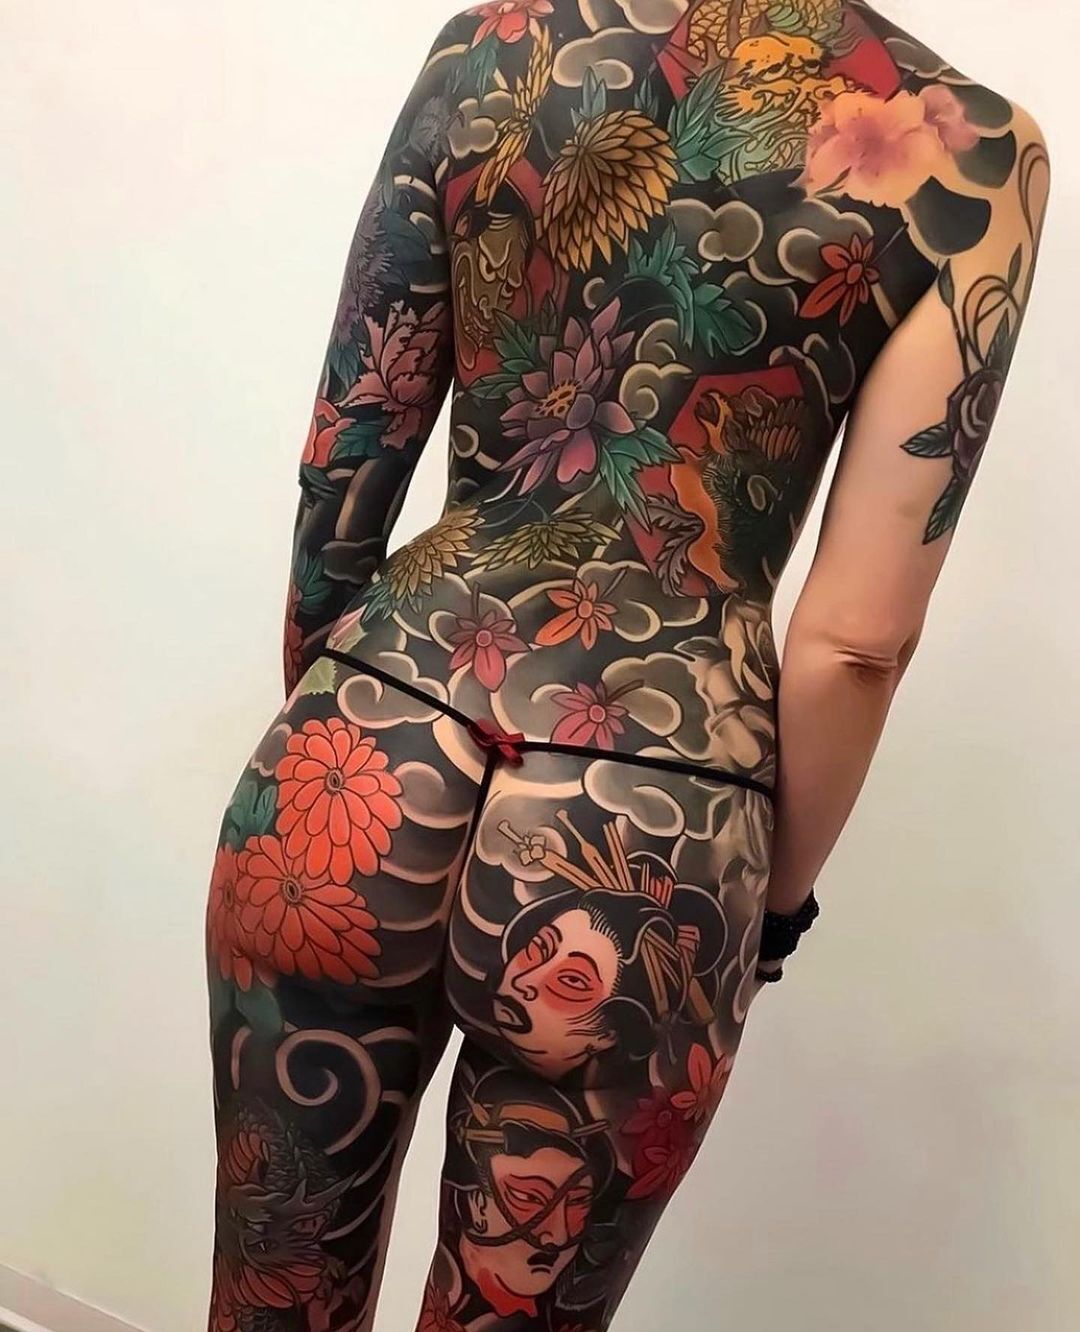 Gorgeous Japanese bodysuit tattoo by © Alessio Ventimiglia